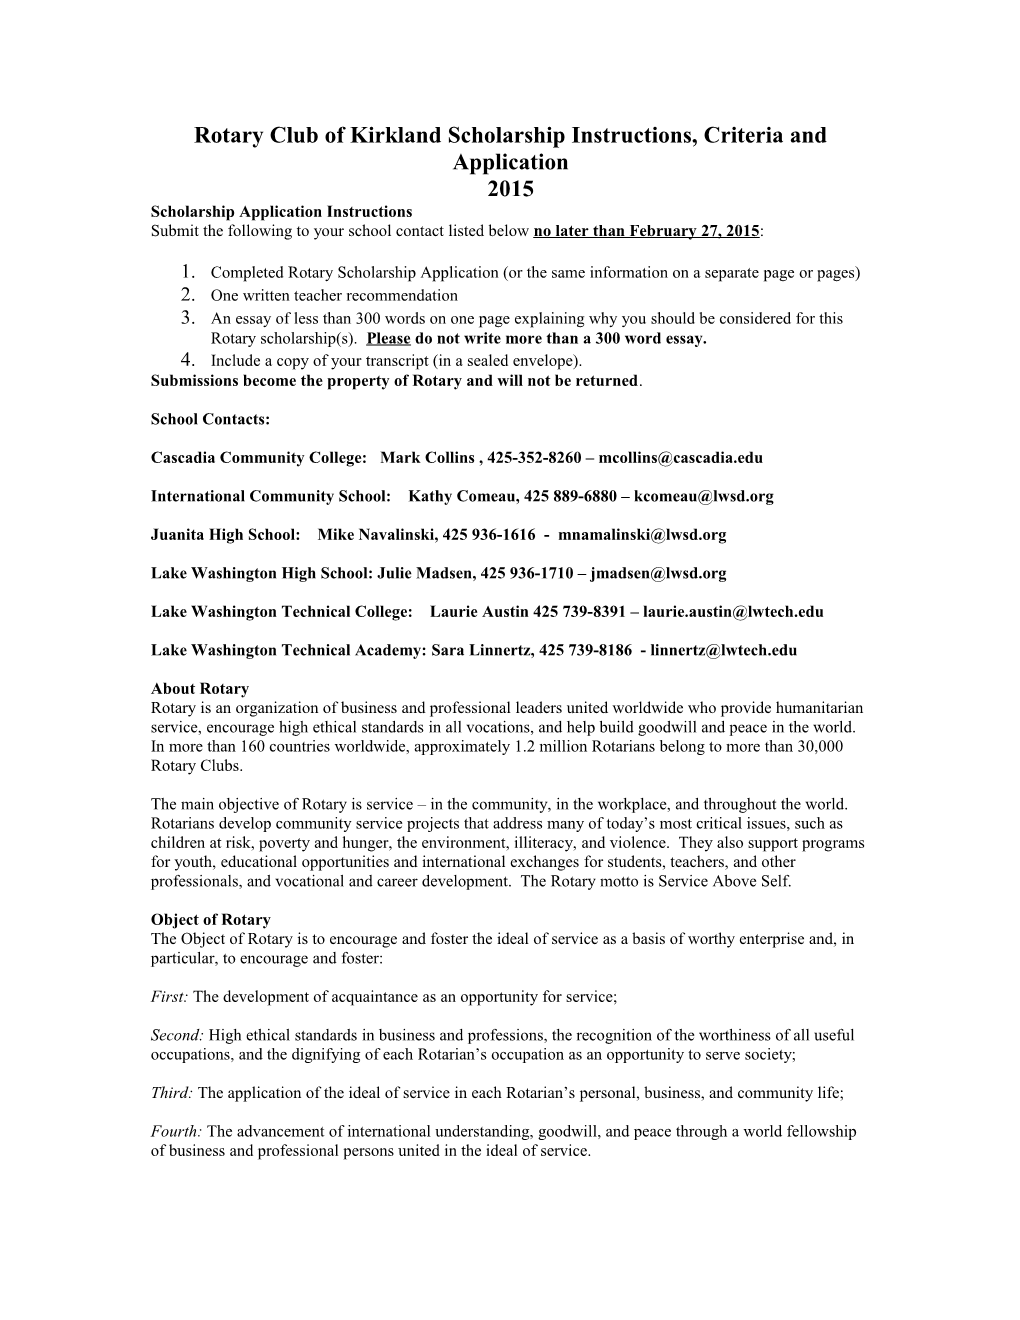 Rotary Club of Kirkland Scholarship Application